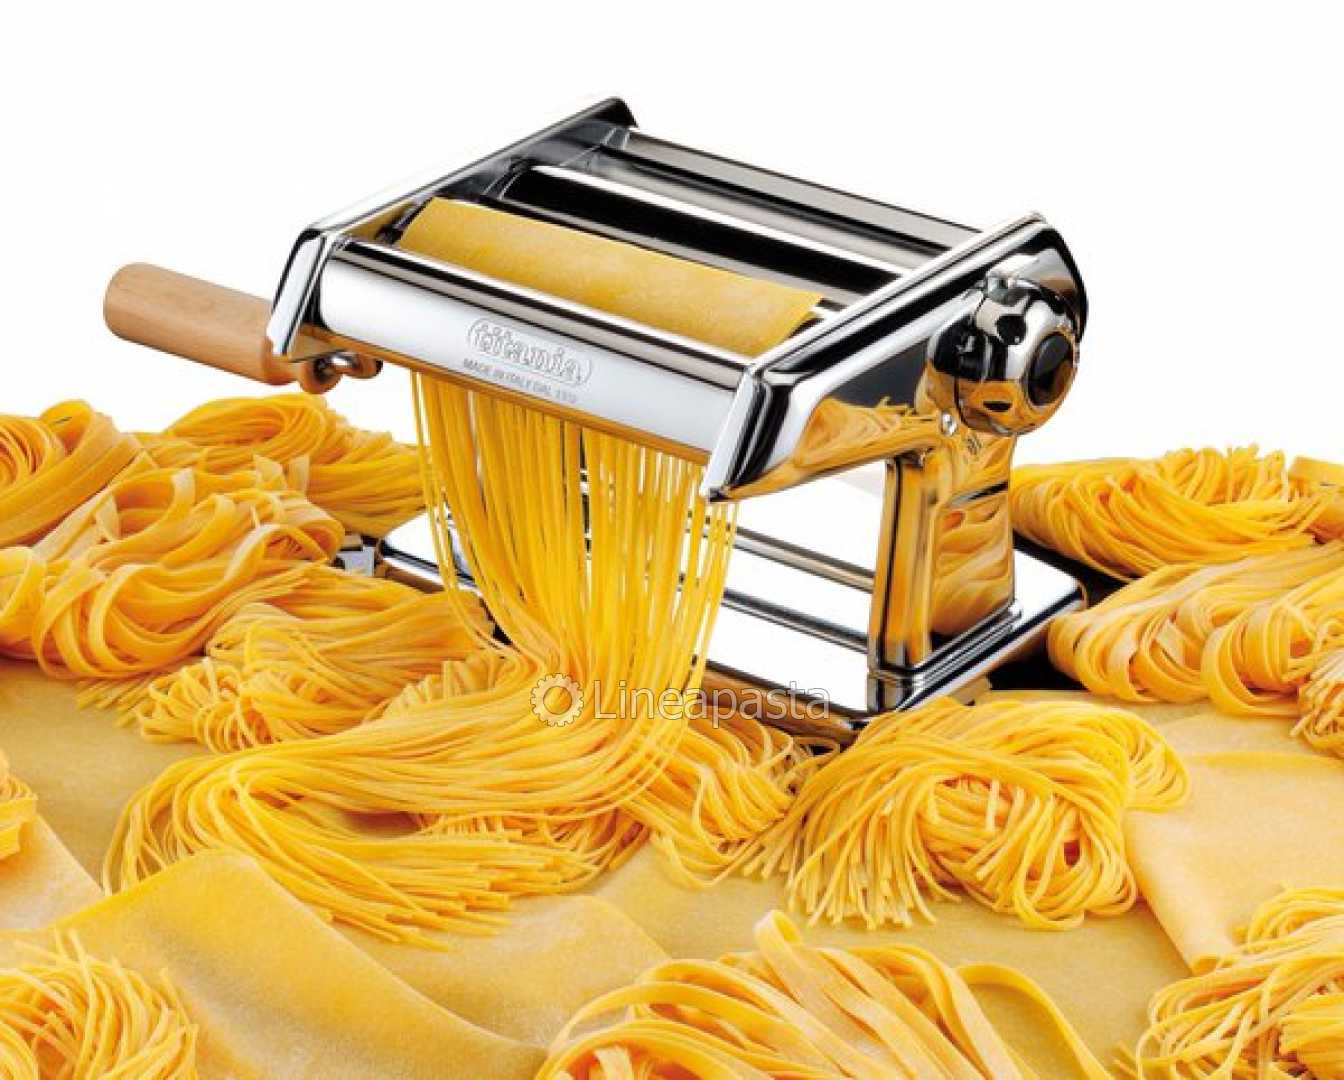 Spaghetti Pasta Cutter for Imperia, Pasta Machines